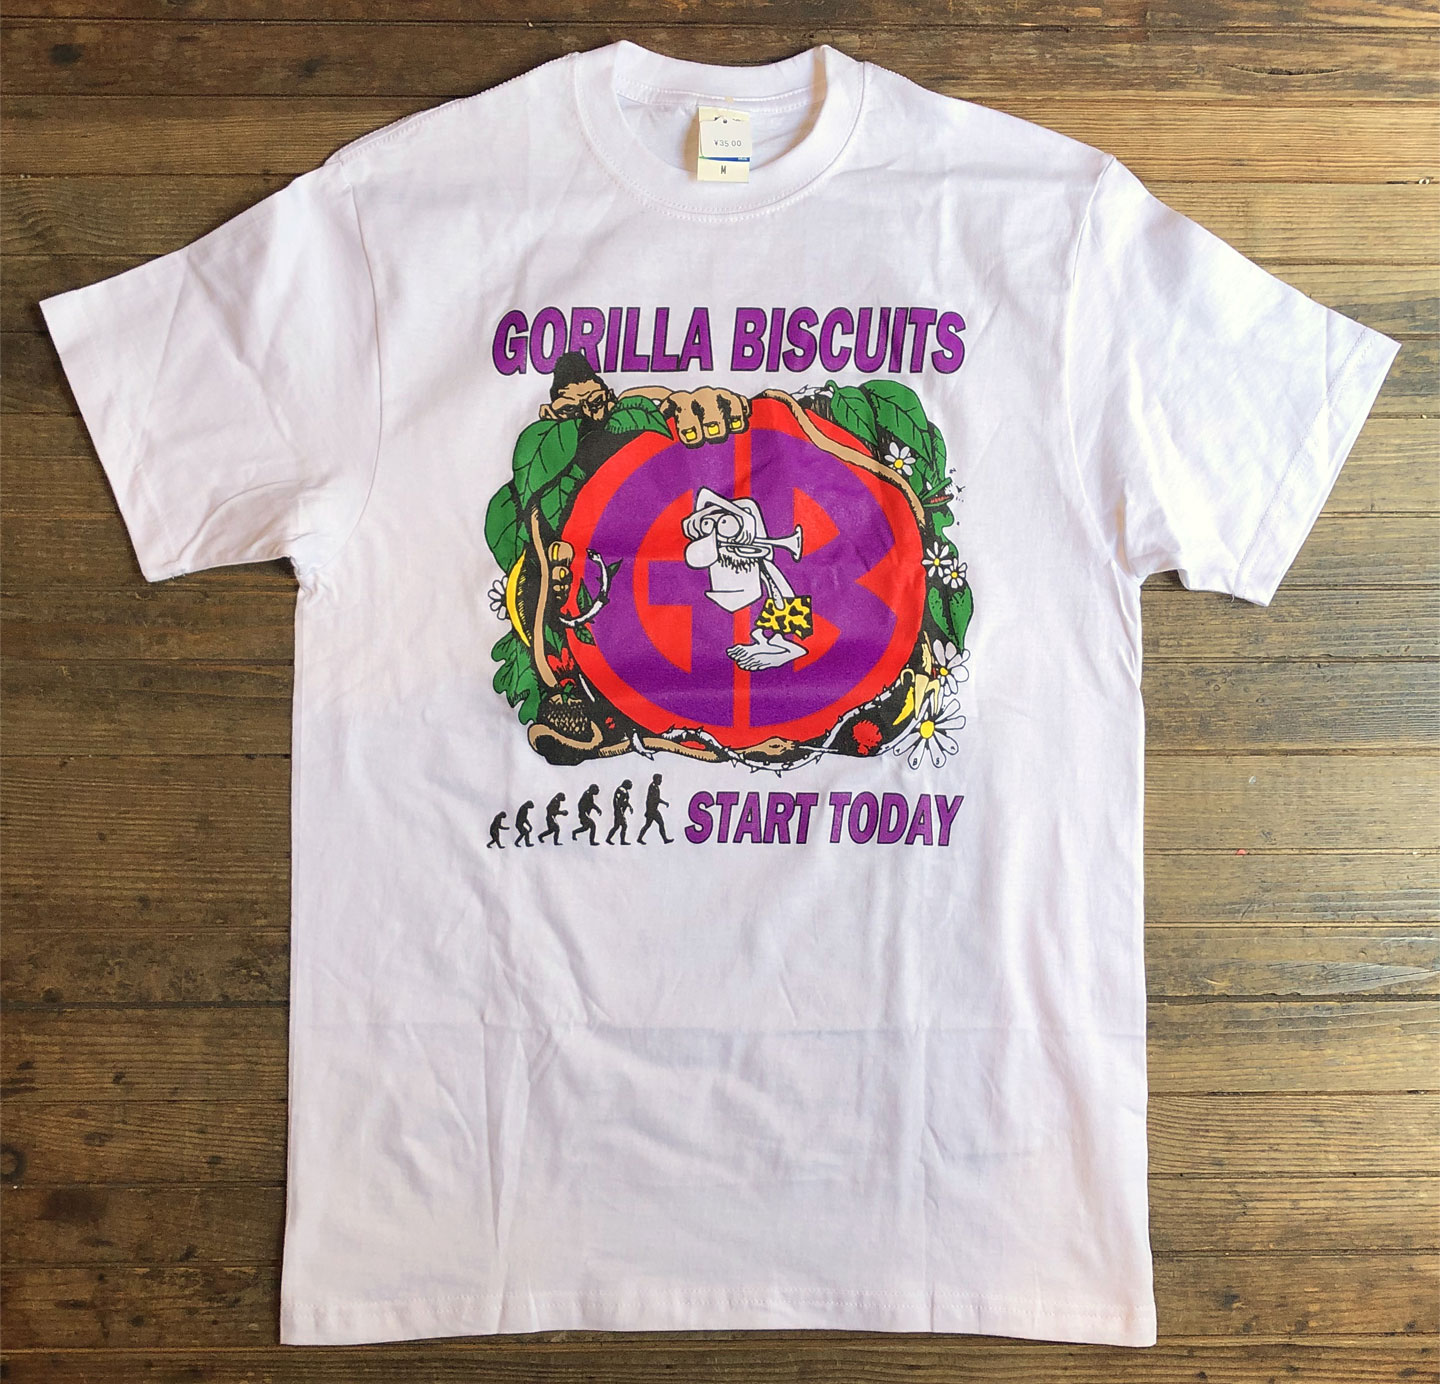 GORILLA BISCUITS Tシャツ EURO TOUR 89